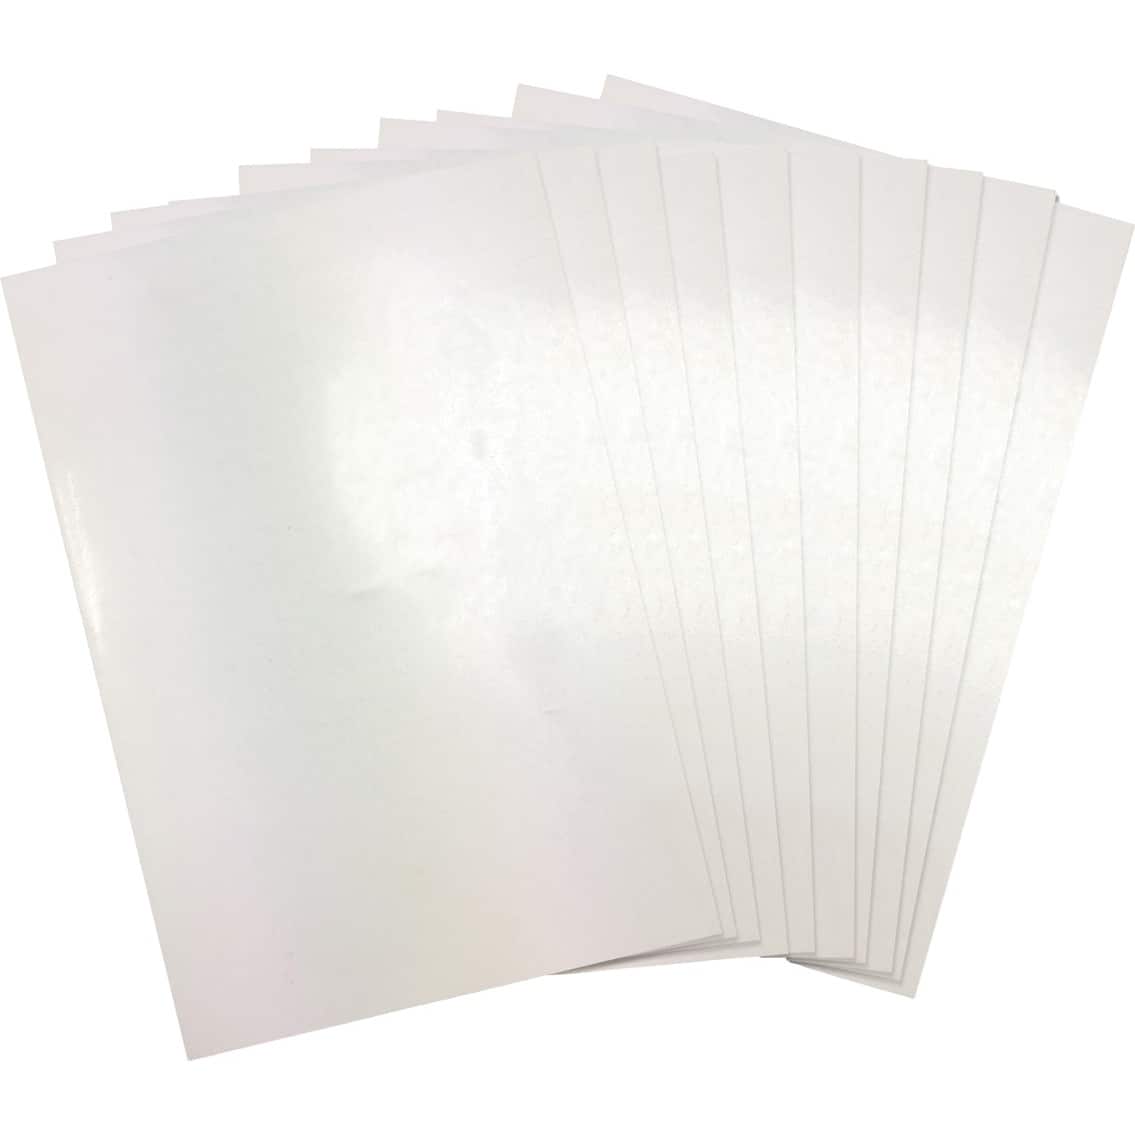 Sizzix Surfacez™ - Shrink Plastic, 8 1/4 x 11 3/4, White, 10 Sheets